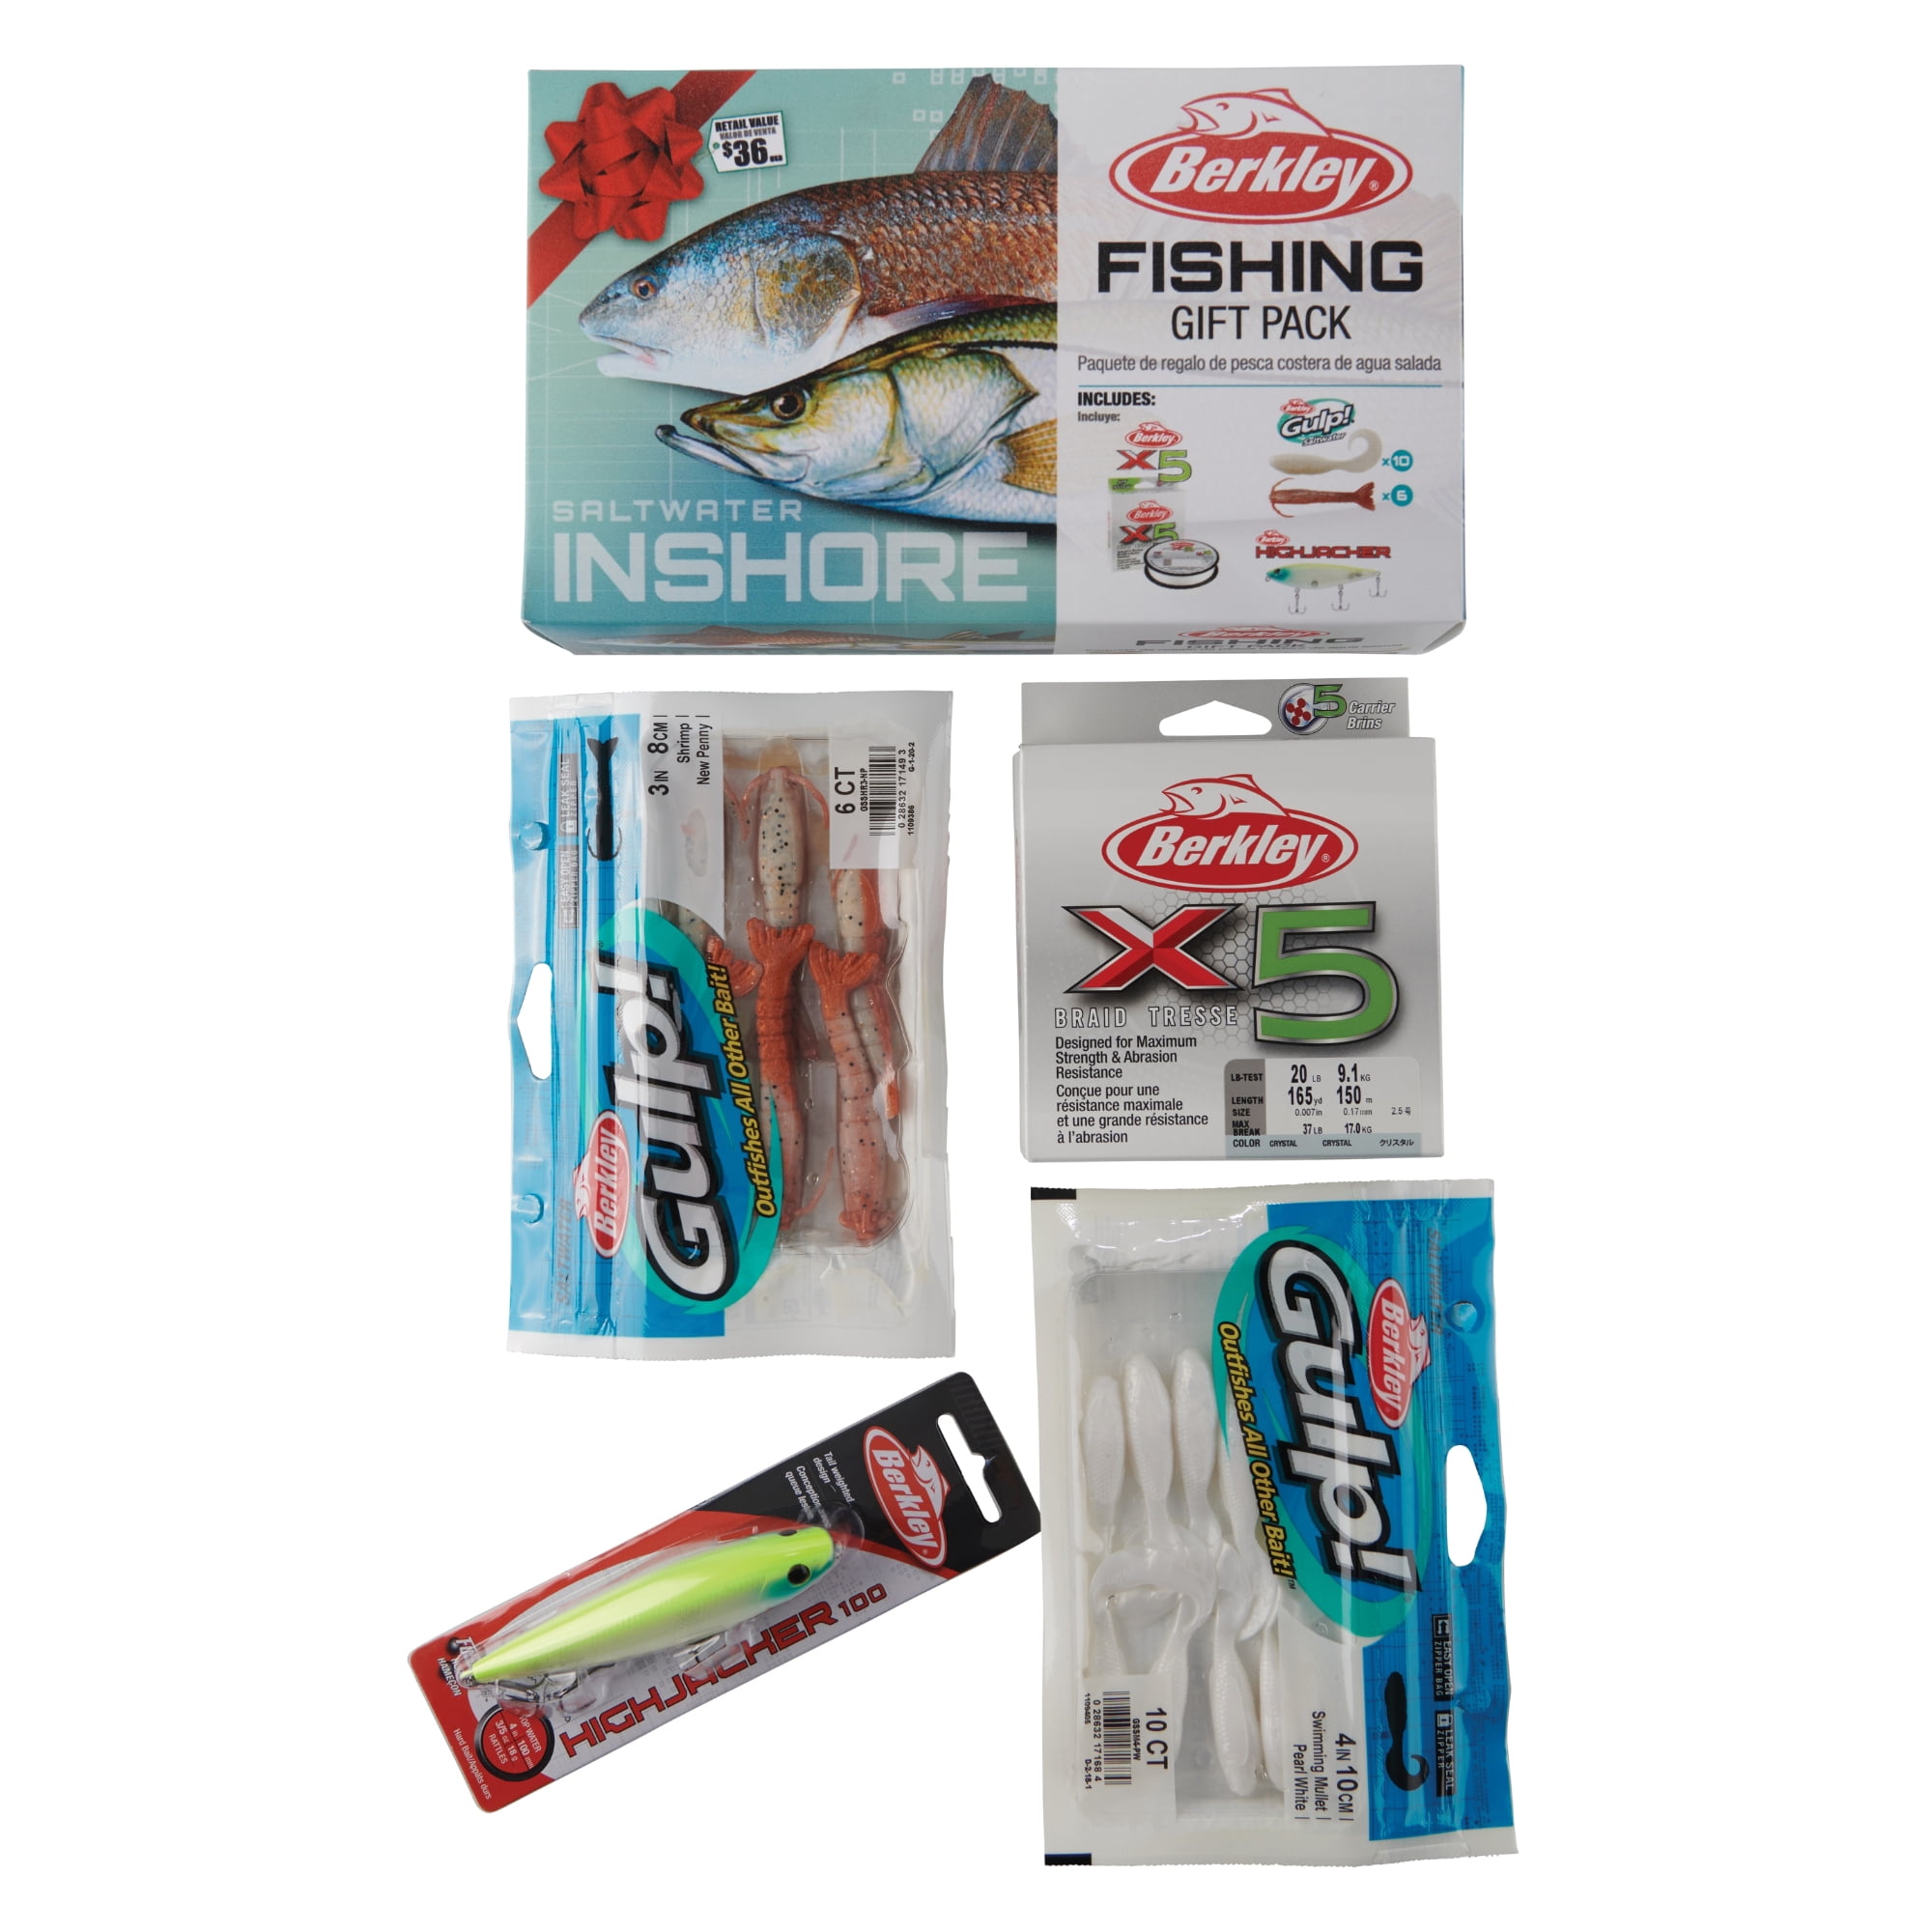 Berkley Walleye Fishing Gift Pack - Corlane Sporting Goods Ltd.